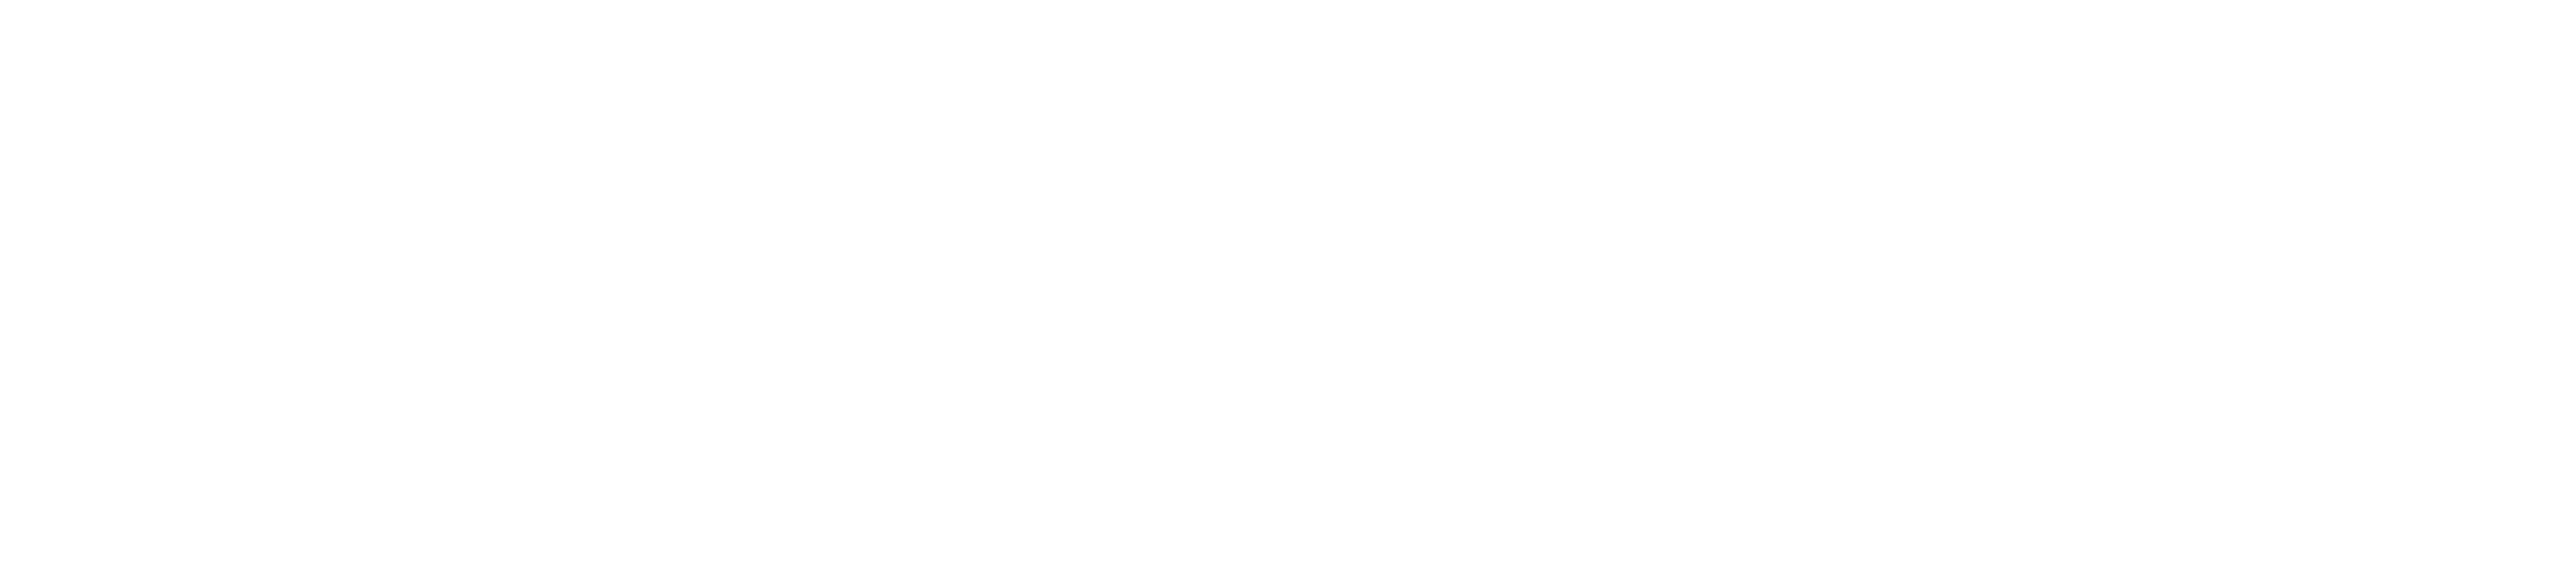 TRU NIAGEN™ logo